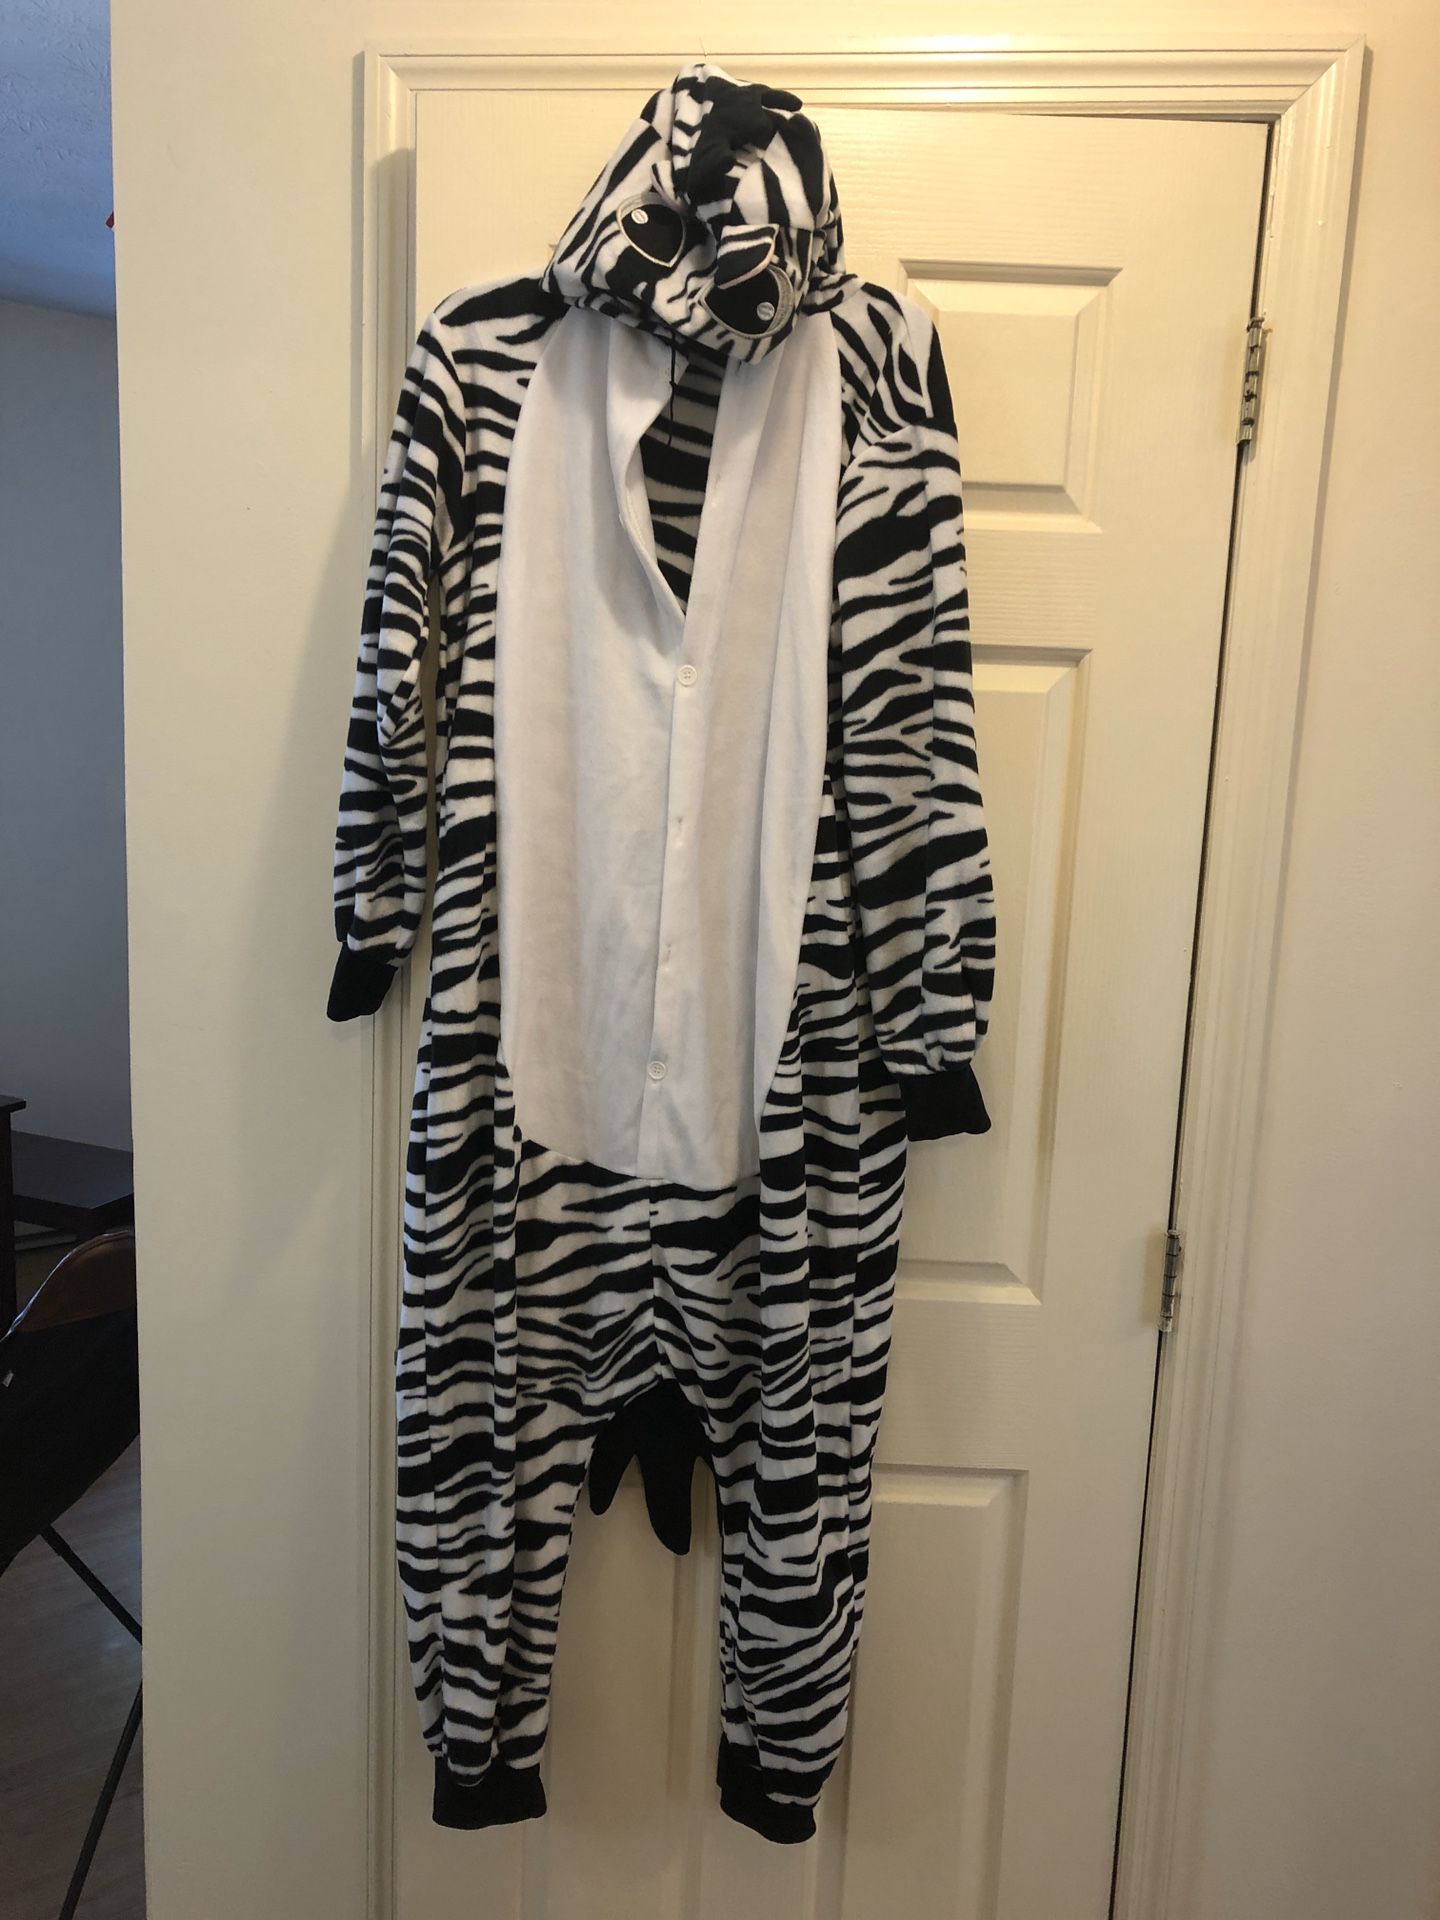 Zebra onesie. Adult size